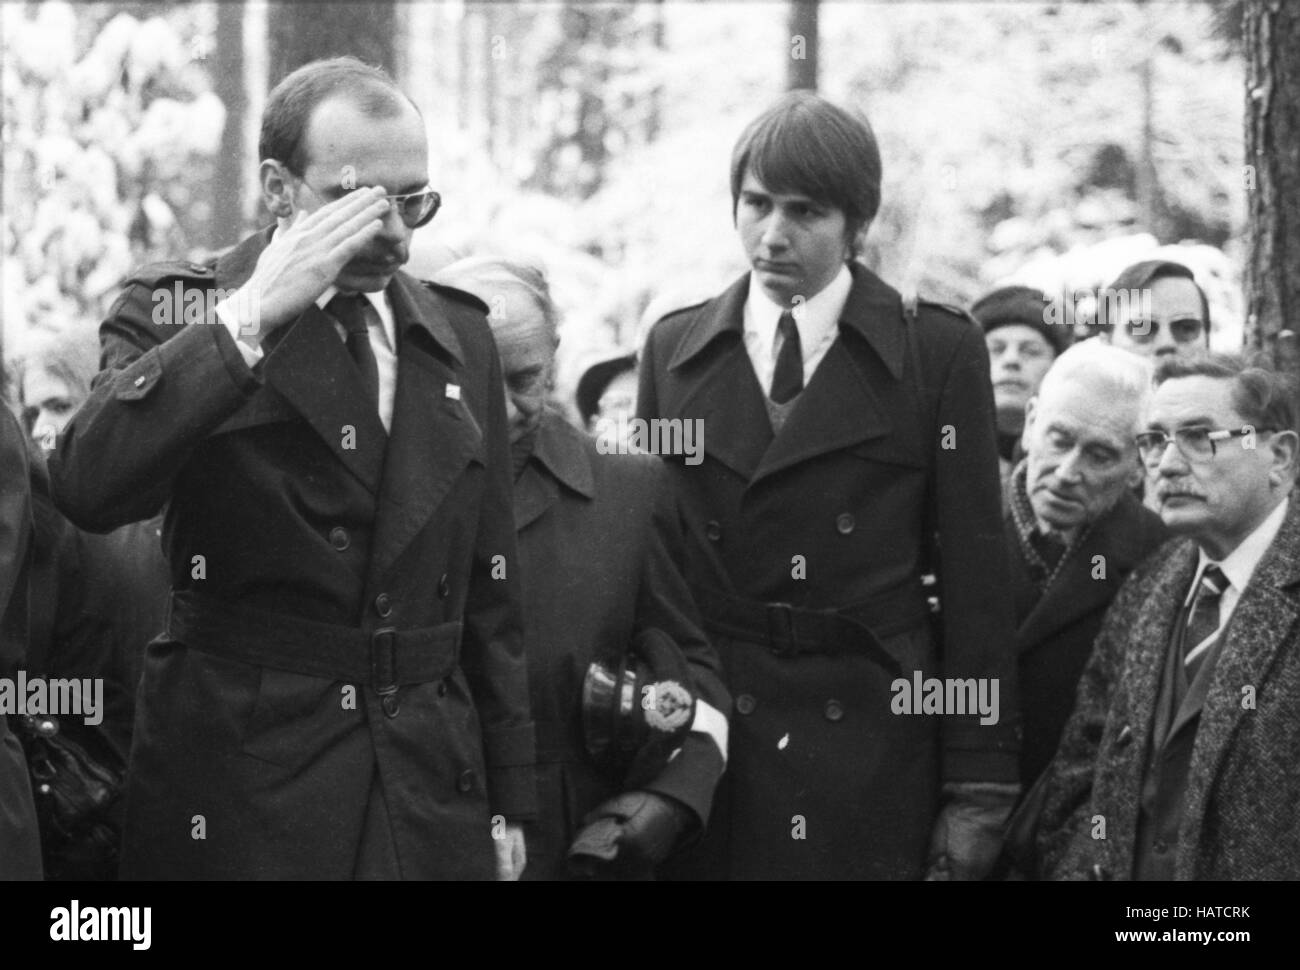 Funeral of condemned war criminal Karl Doenitz on 6 January 1981 in Aumuehle near Hamburg. | usage worldwide Stock Photo